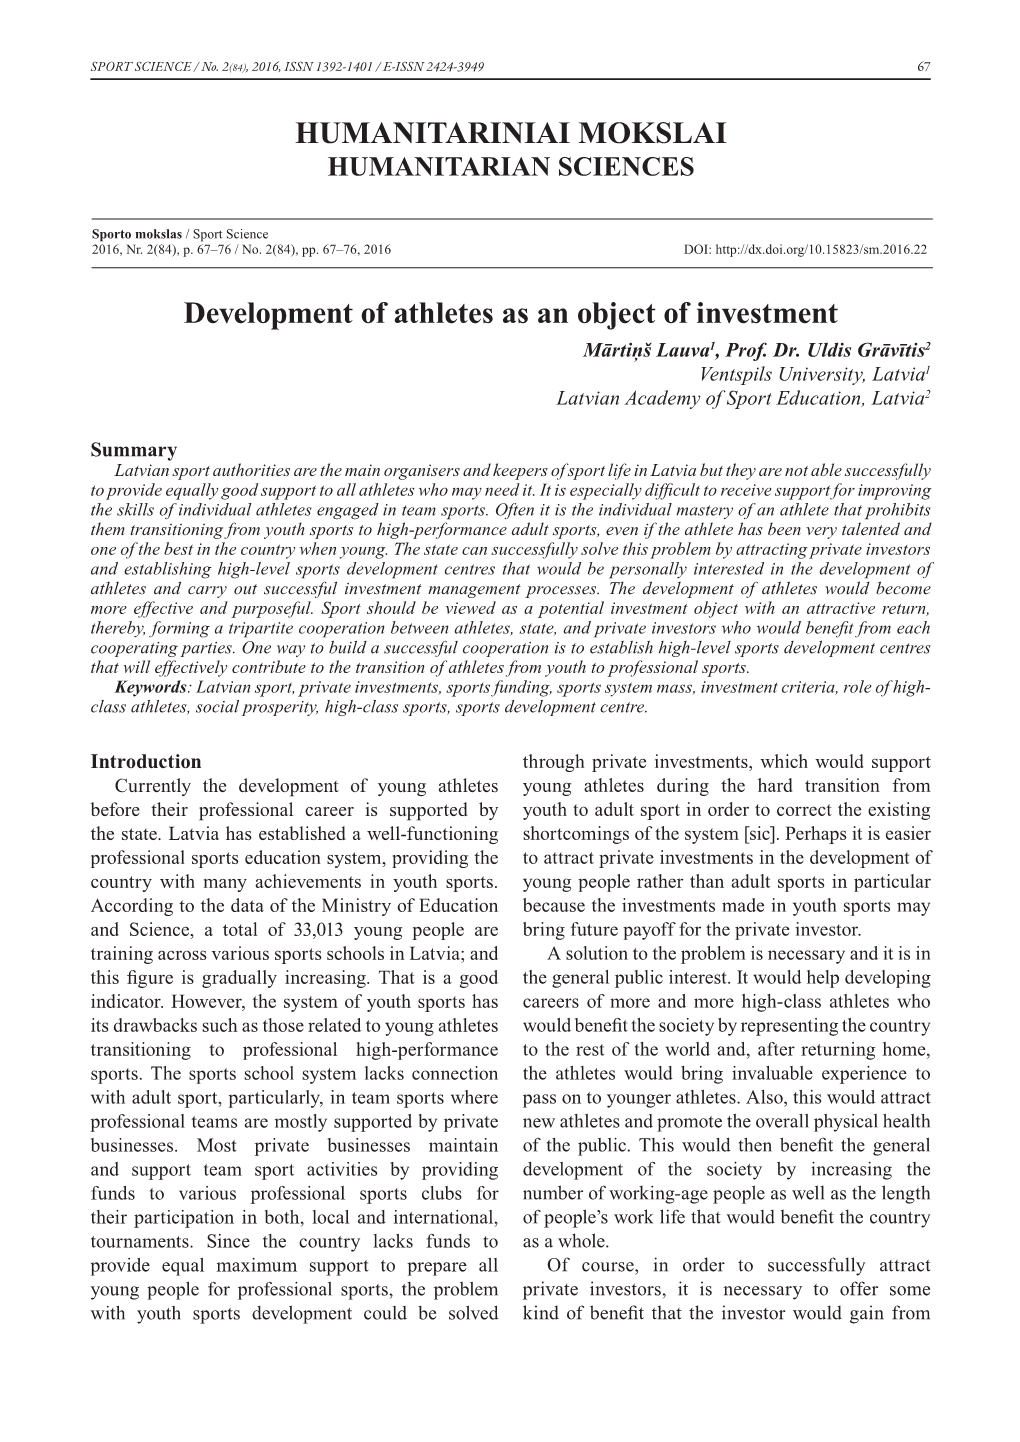 HUMANITARINIAI MOKSLAI Development of Athletes As an Object of Investment